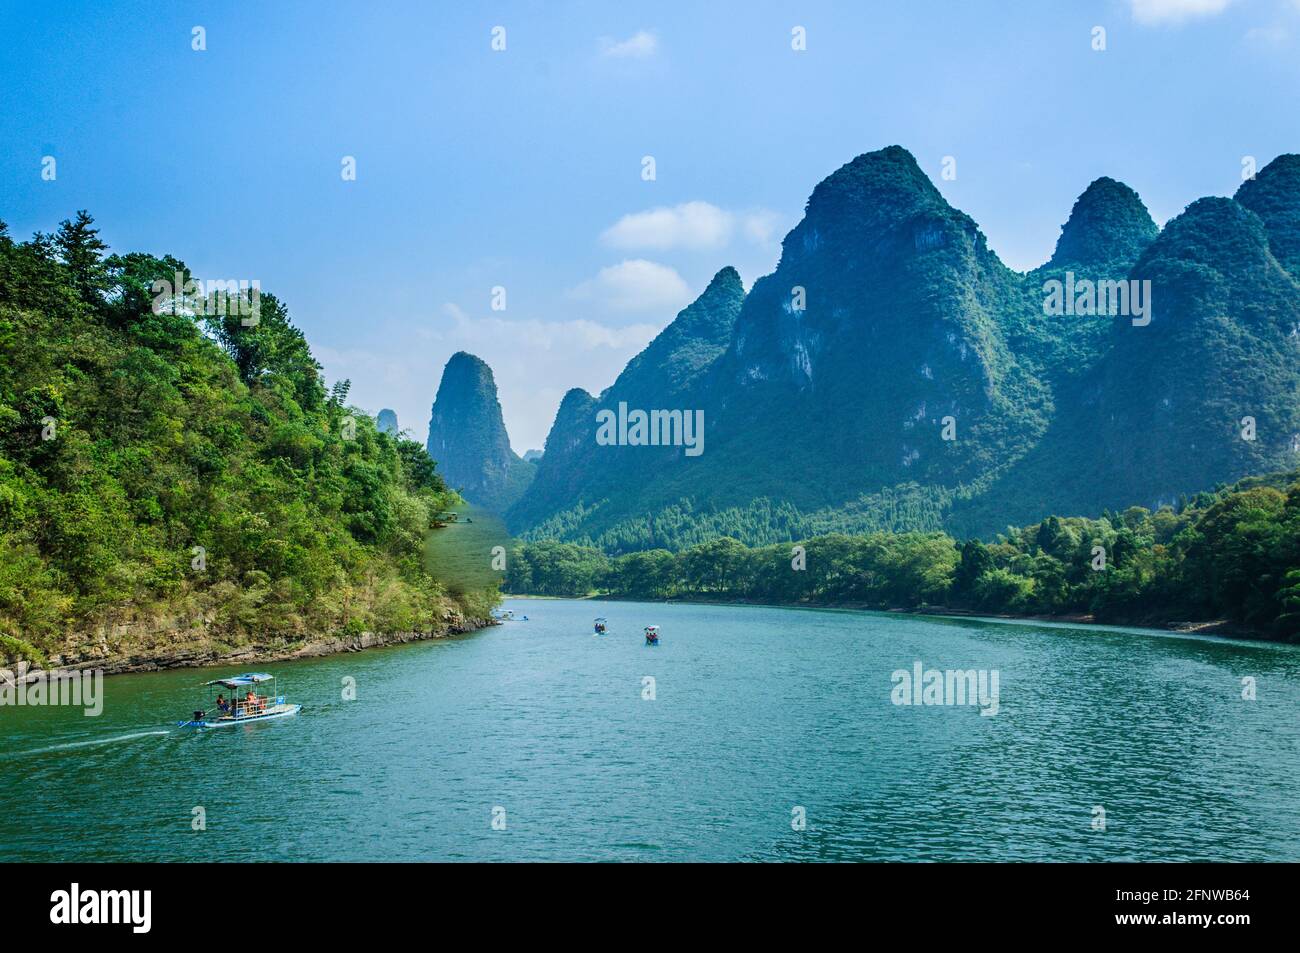 The Li river scenery in summer Stock Photo